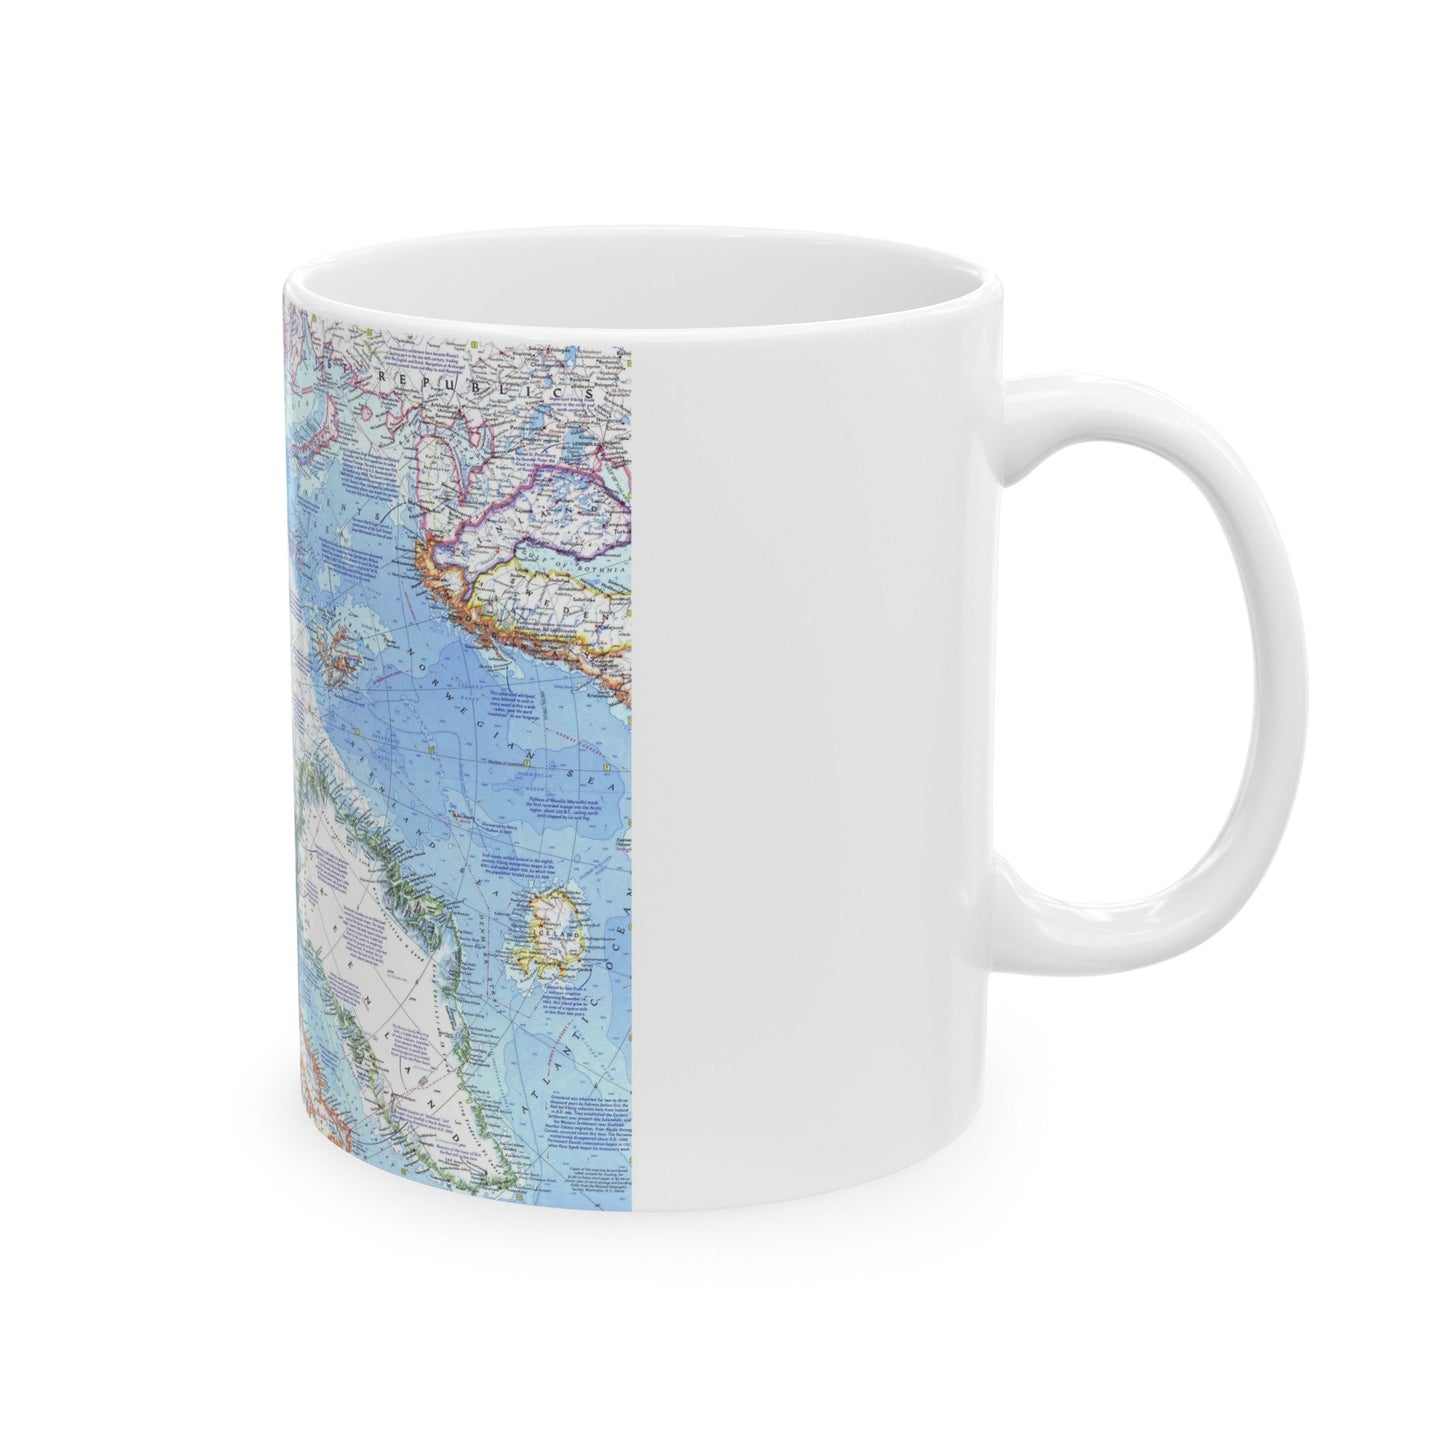 Arctic Ocean (1971) (Map) White Coffee Mug-The Sticker Space